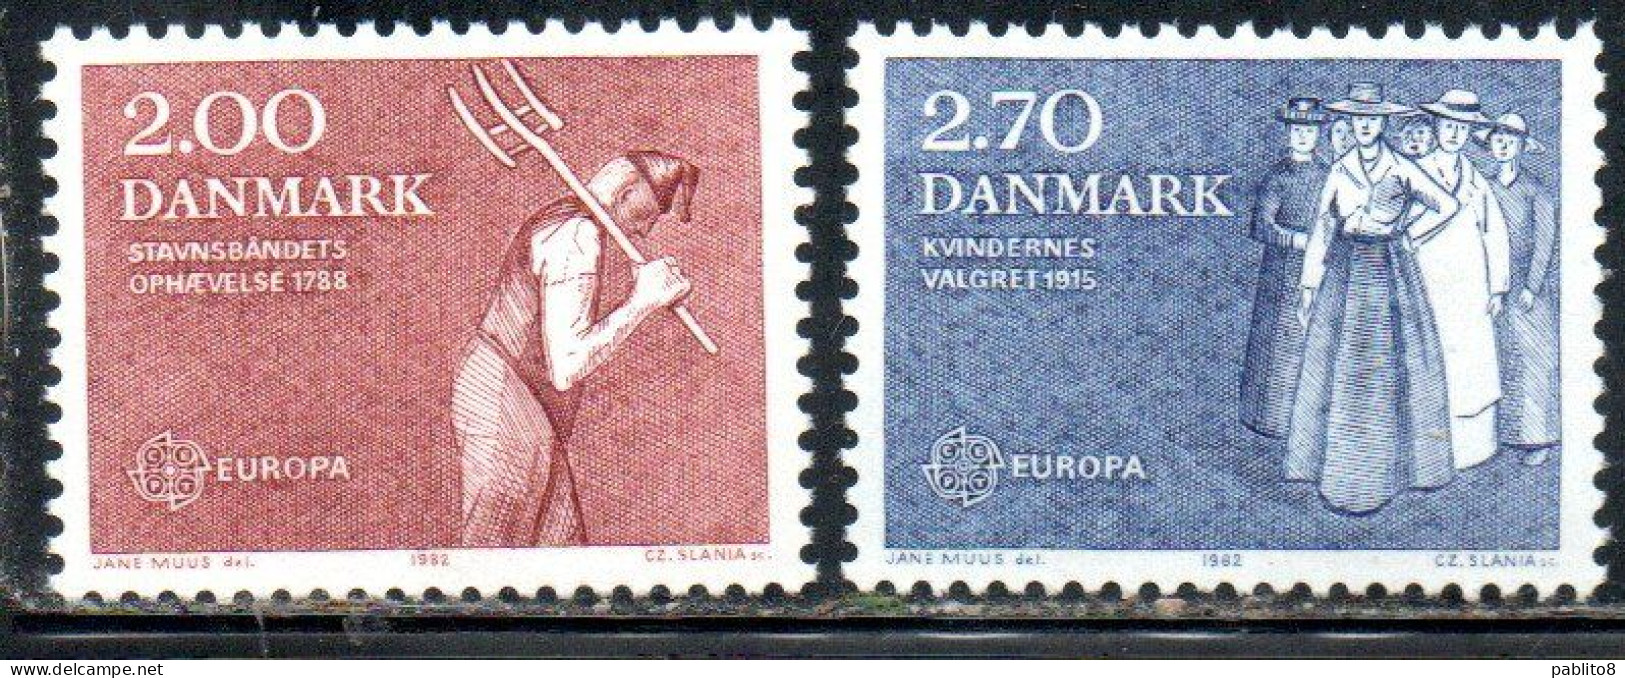 DANEMARK DANMARK DENMARK DANIMARCA 1982 EUROPA CEPT COMPLETE SET SERIE COMPLETA MNH - Ungebraucht